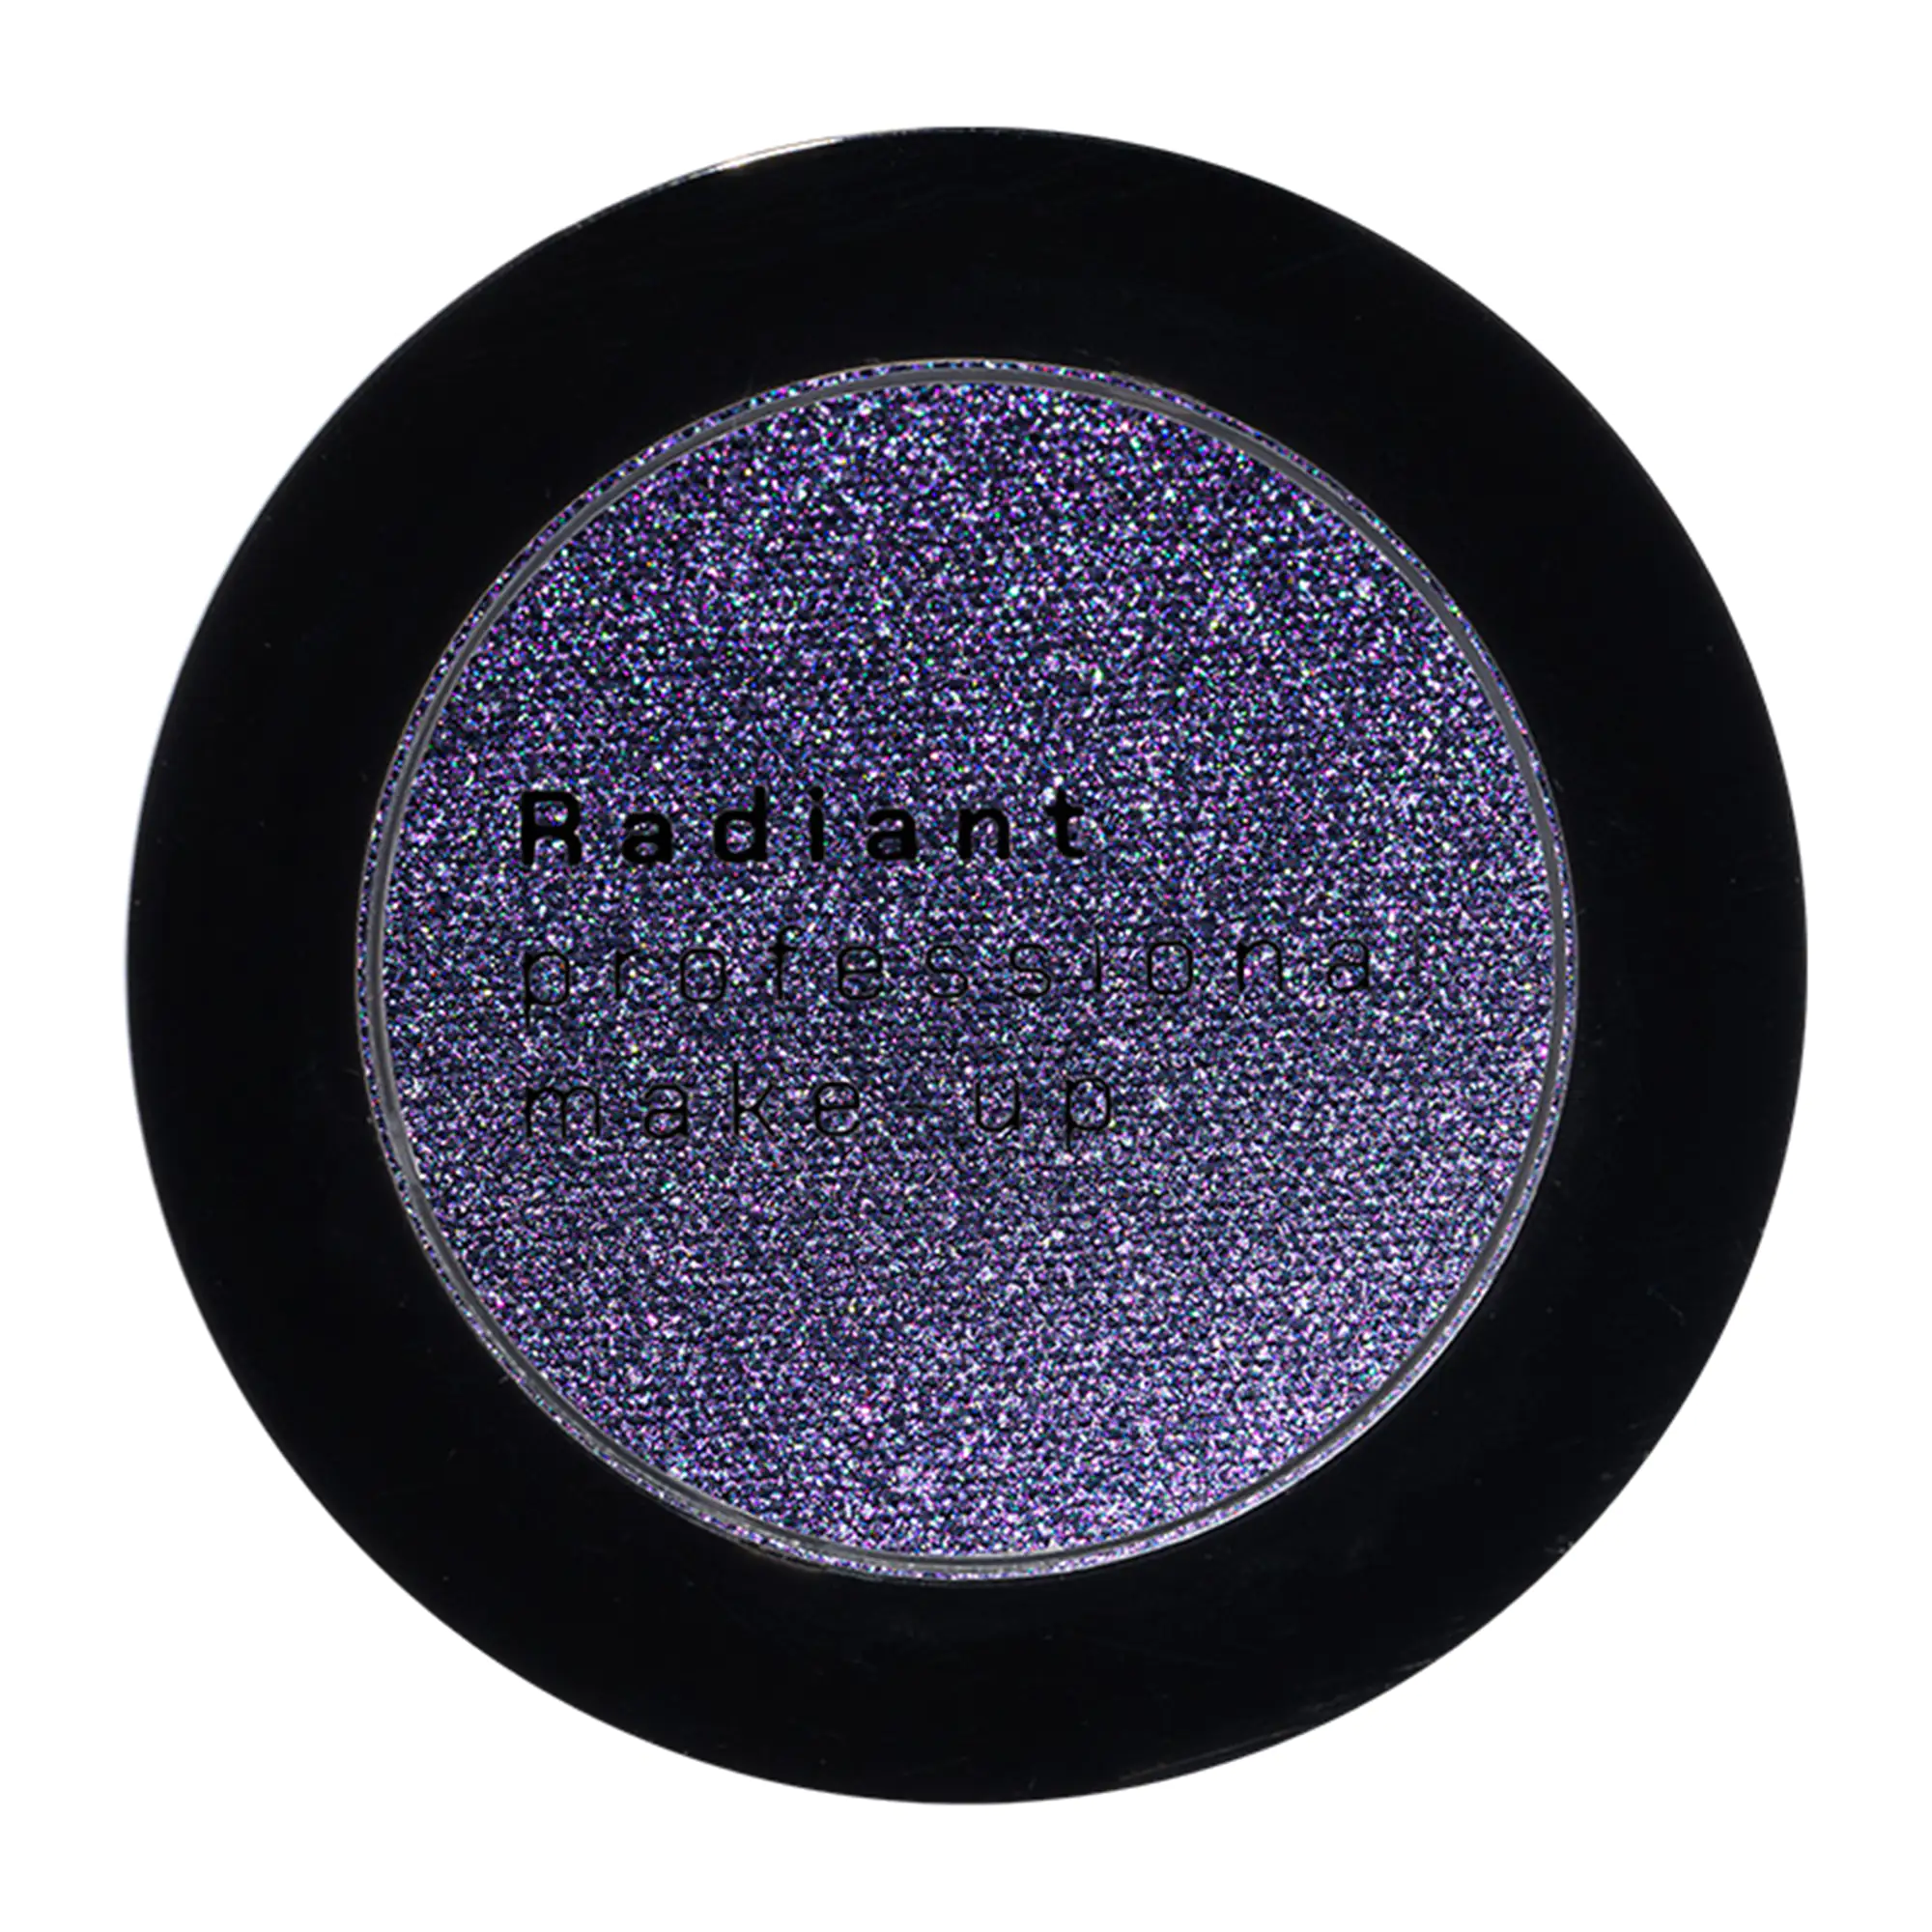 Radiant Σκιά Eye Color Metallic No 1 Dusty Lavender